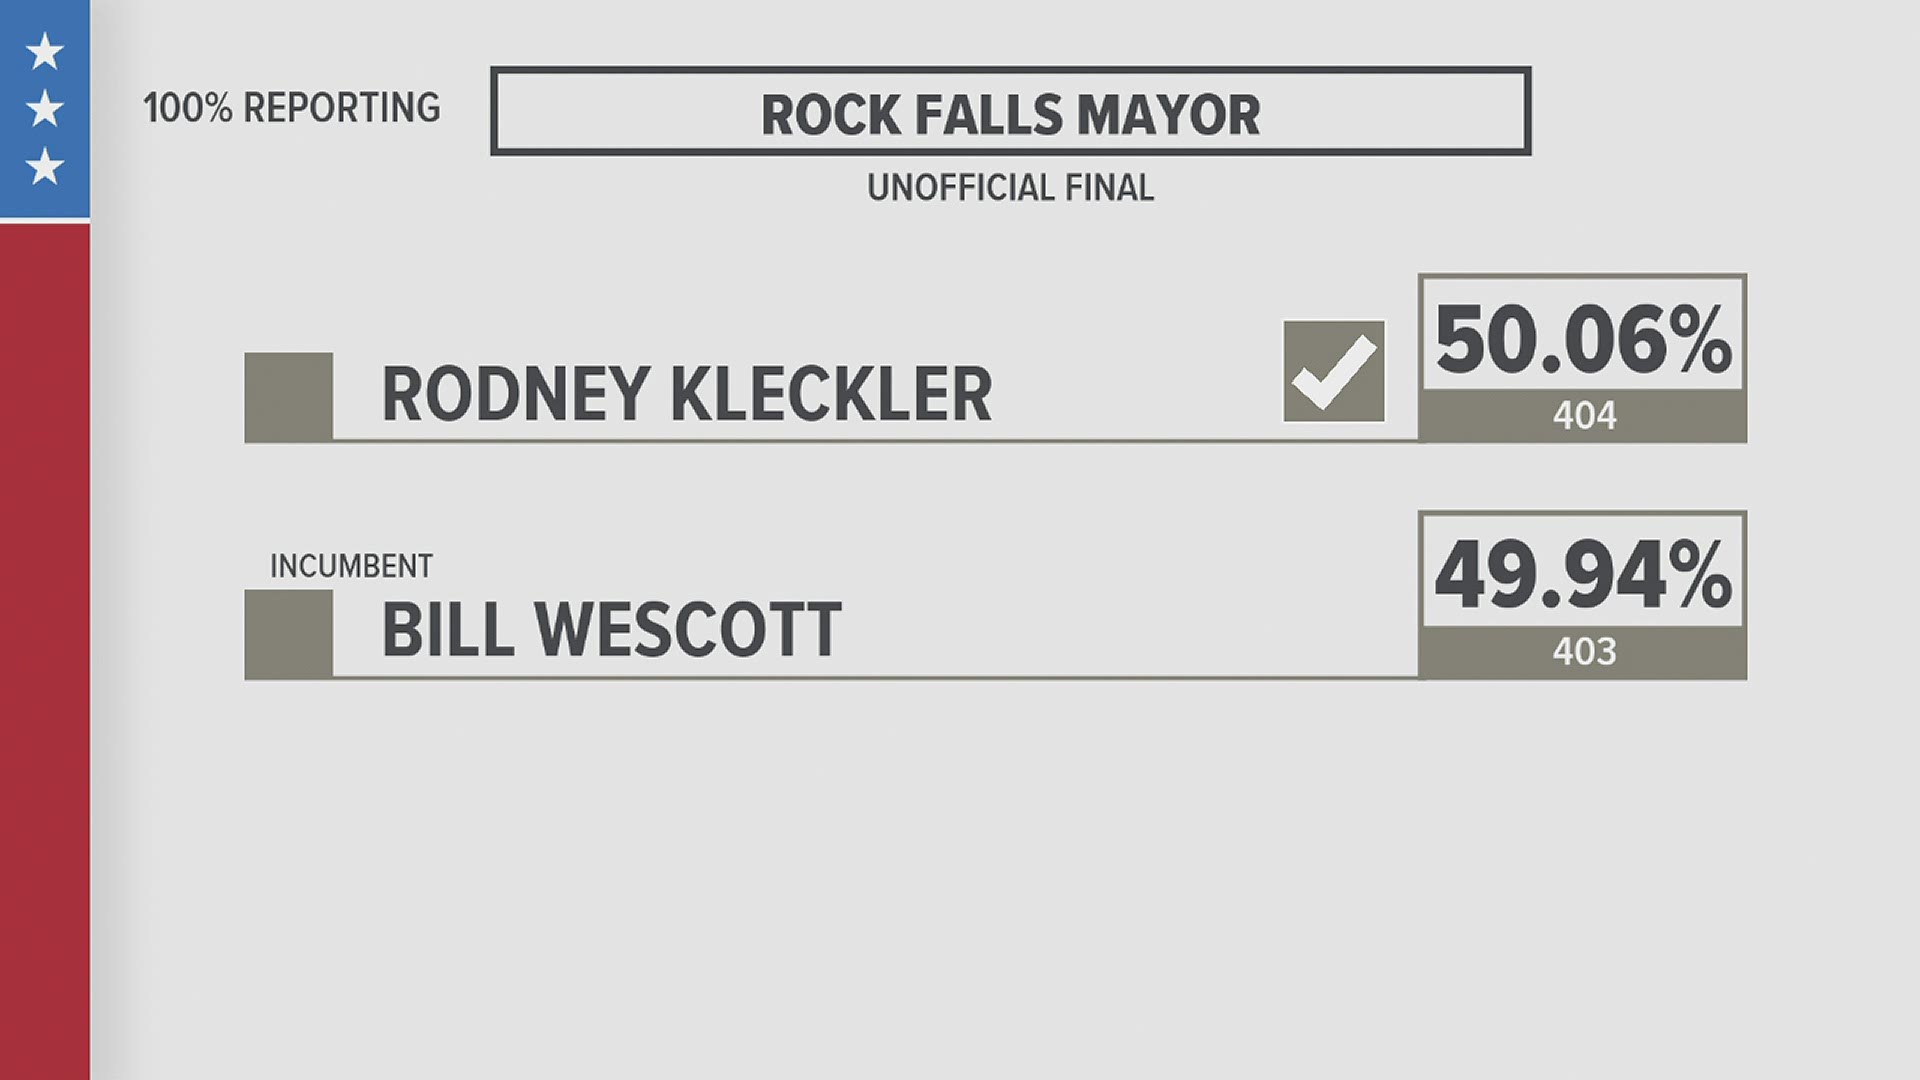 Wednesday morning, April 7th, Alderman Rodney Kleckler led incumbent Bill Wescott by just one vote.